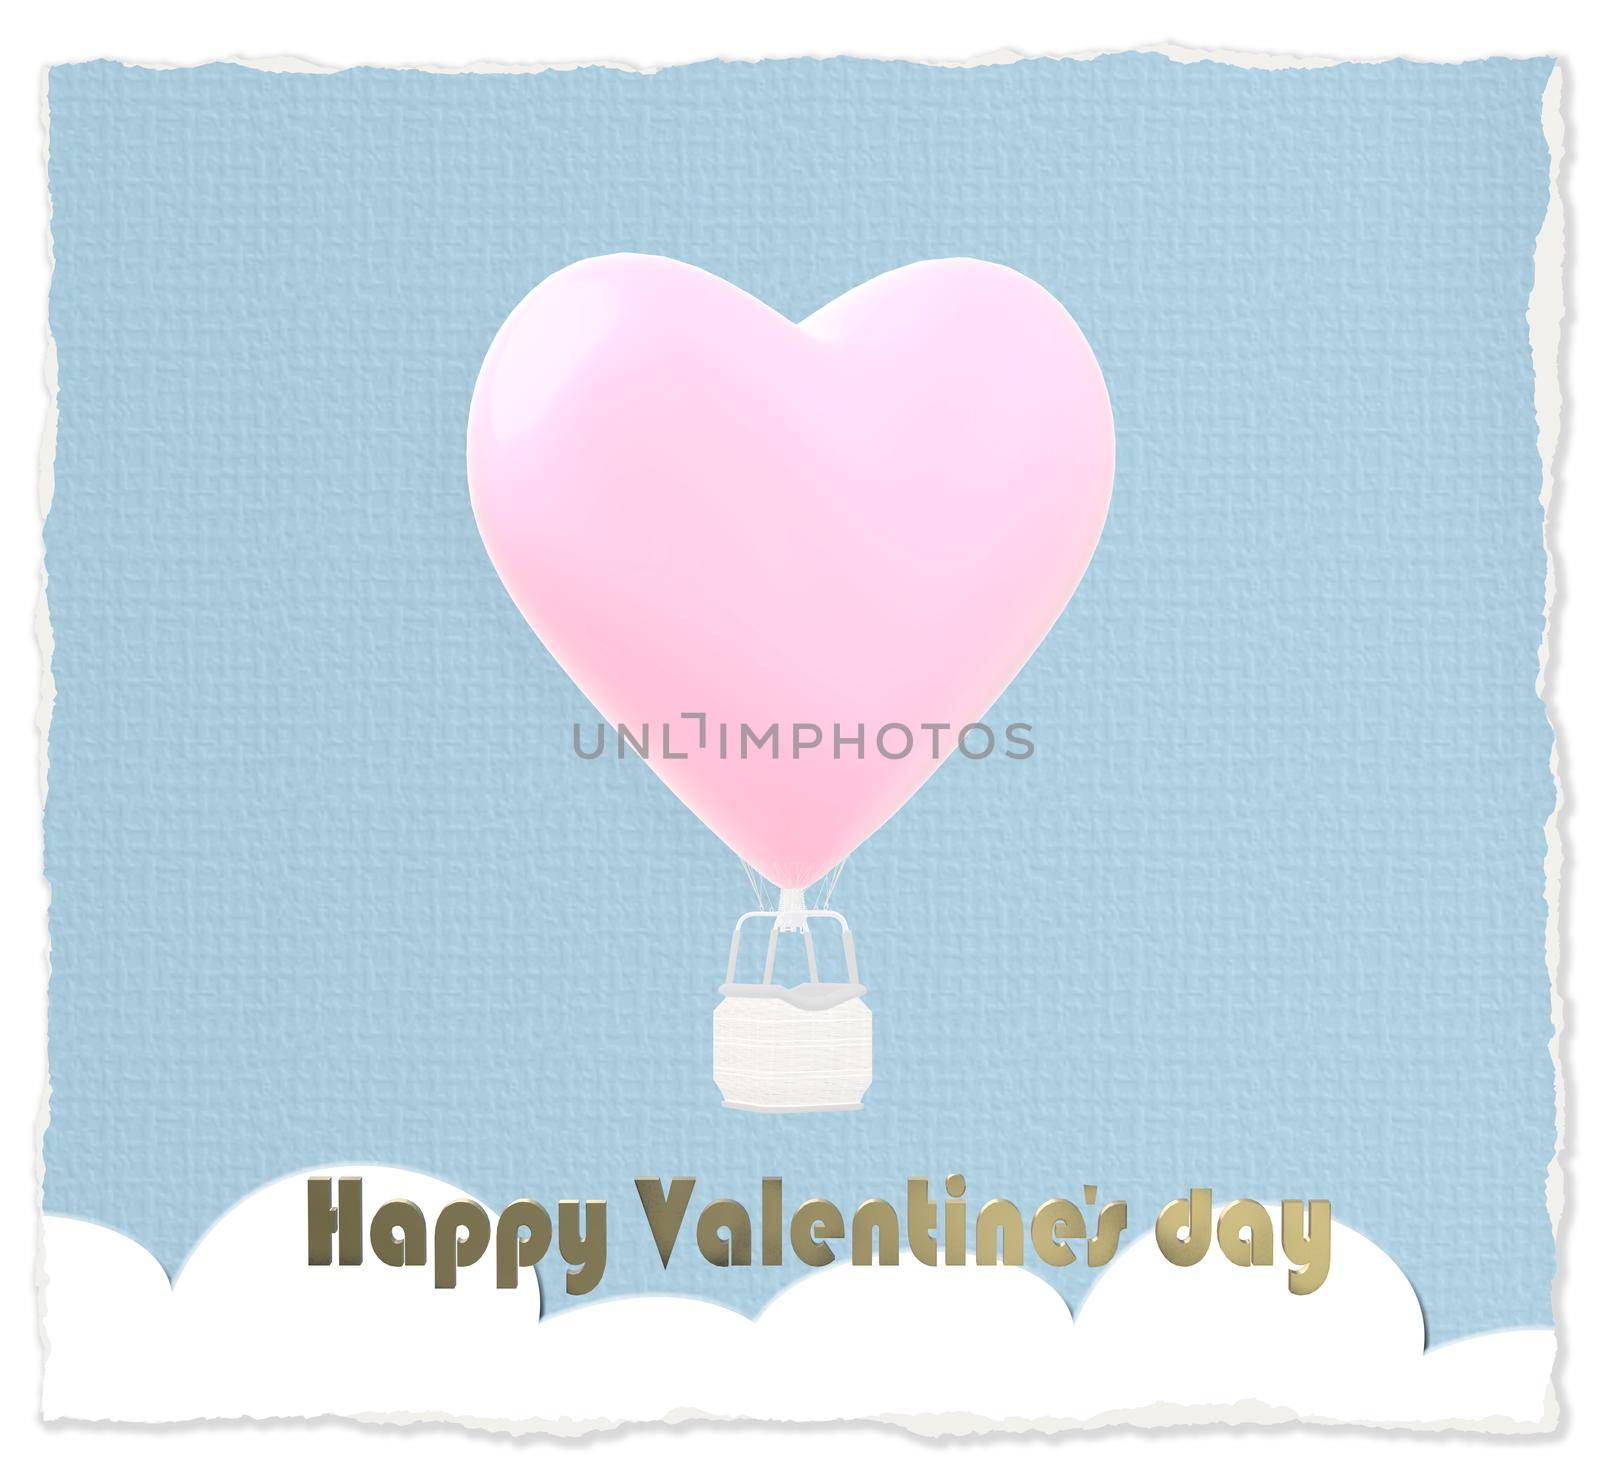 Happy Valentine's Day greeting card by NelliPolk